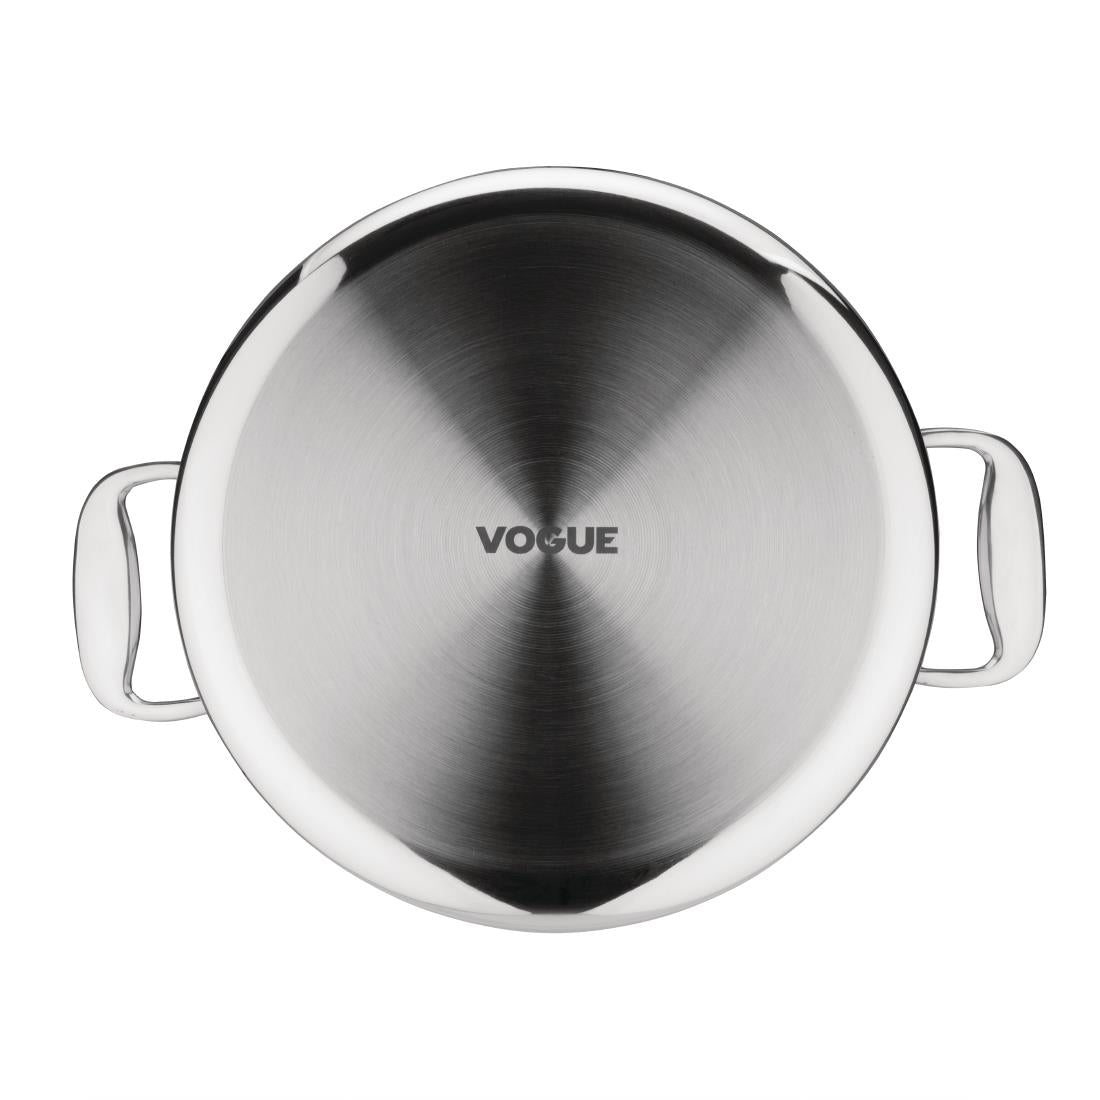 Y256 Vogue Tri Wall Stew Pan 9.5Ltr